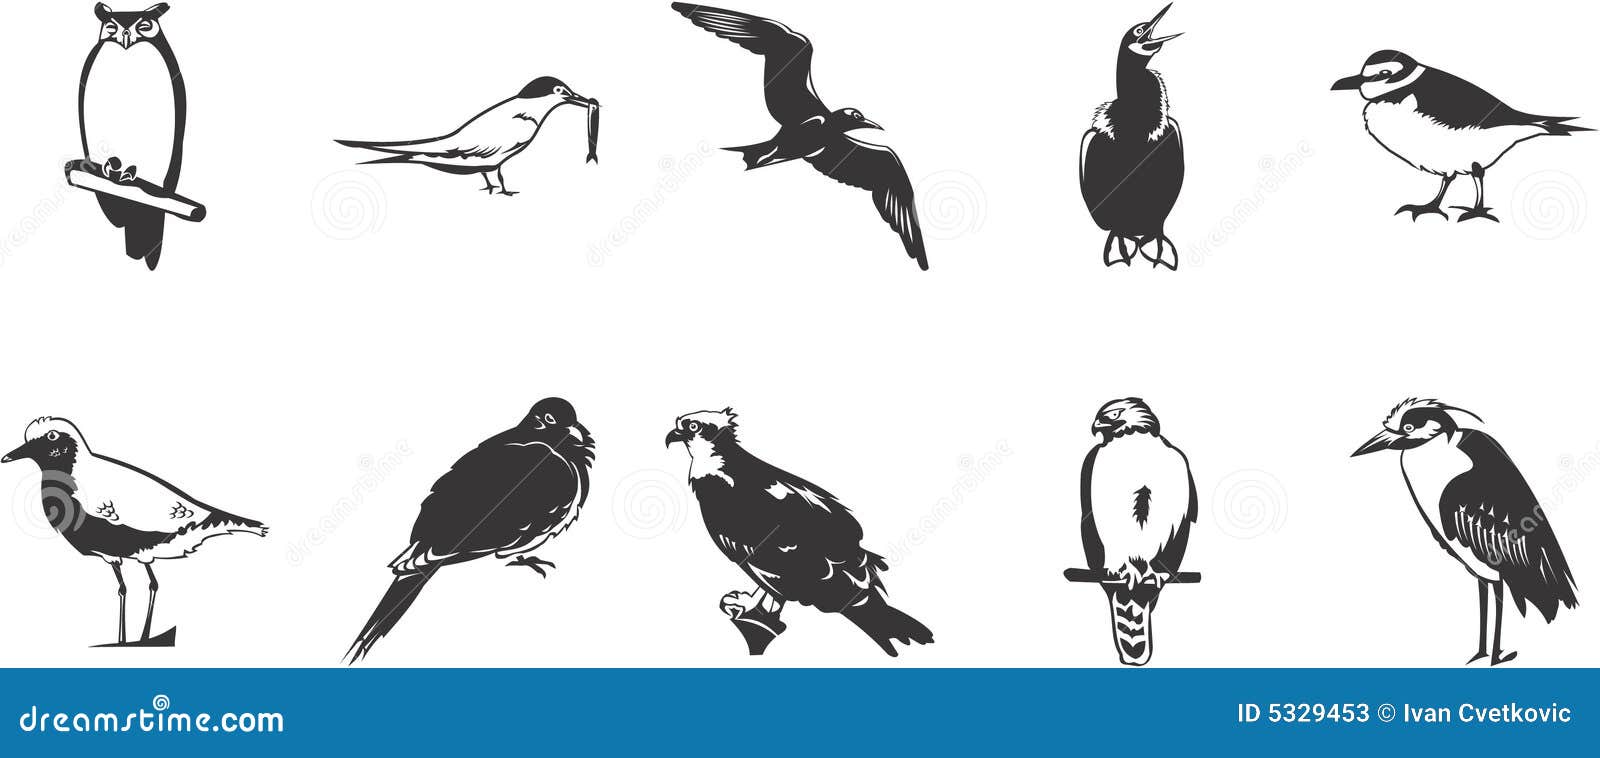 sketches of birds